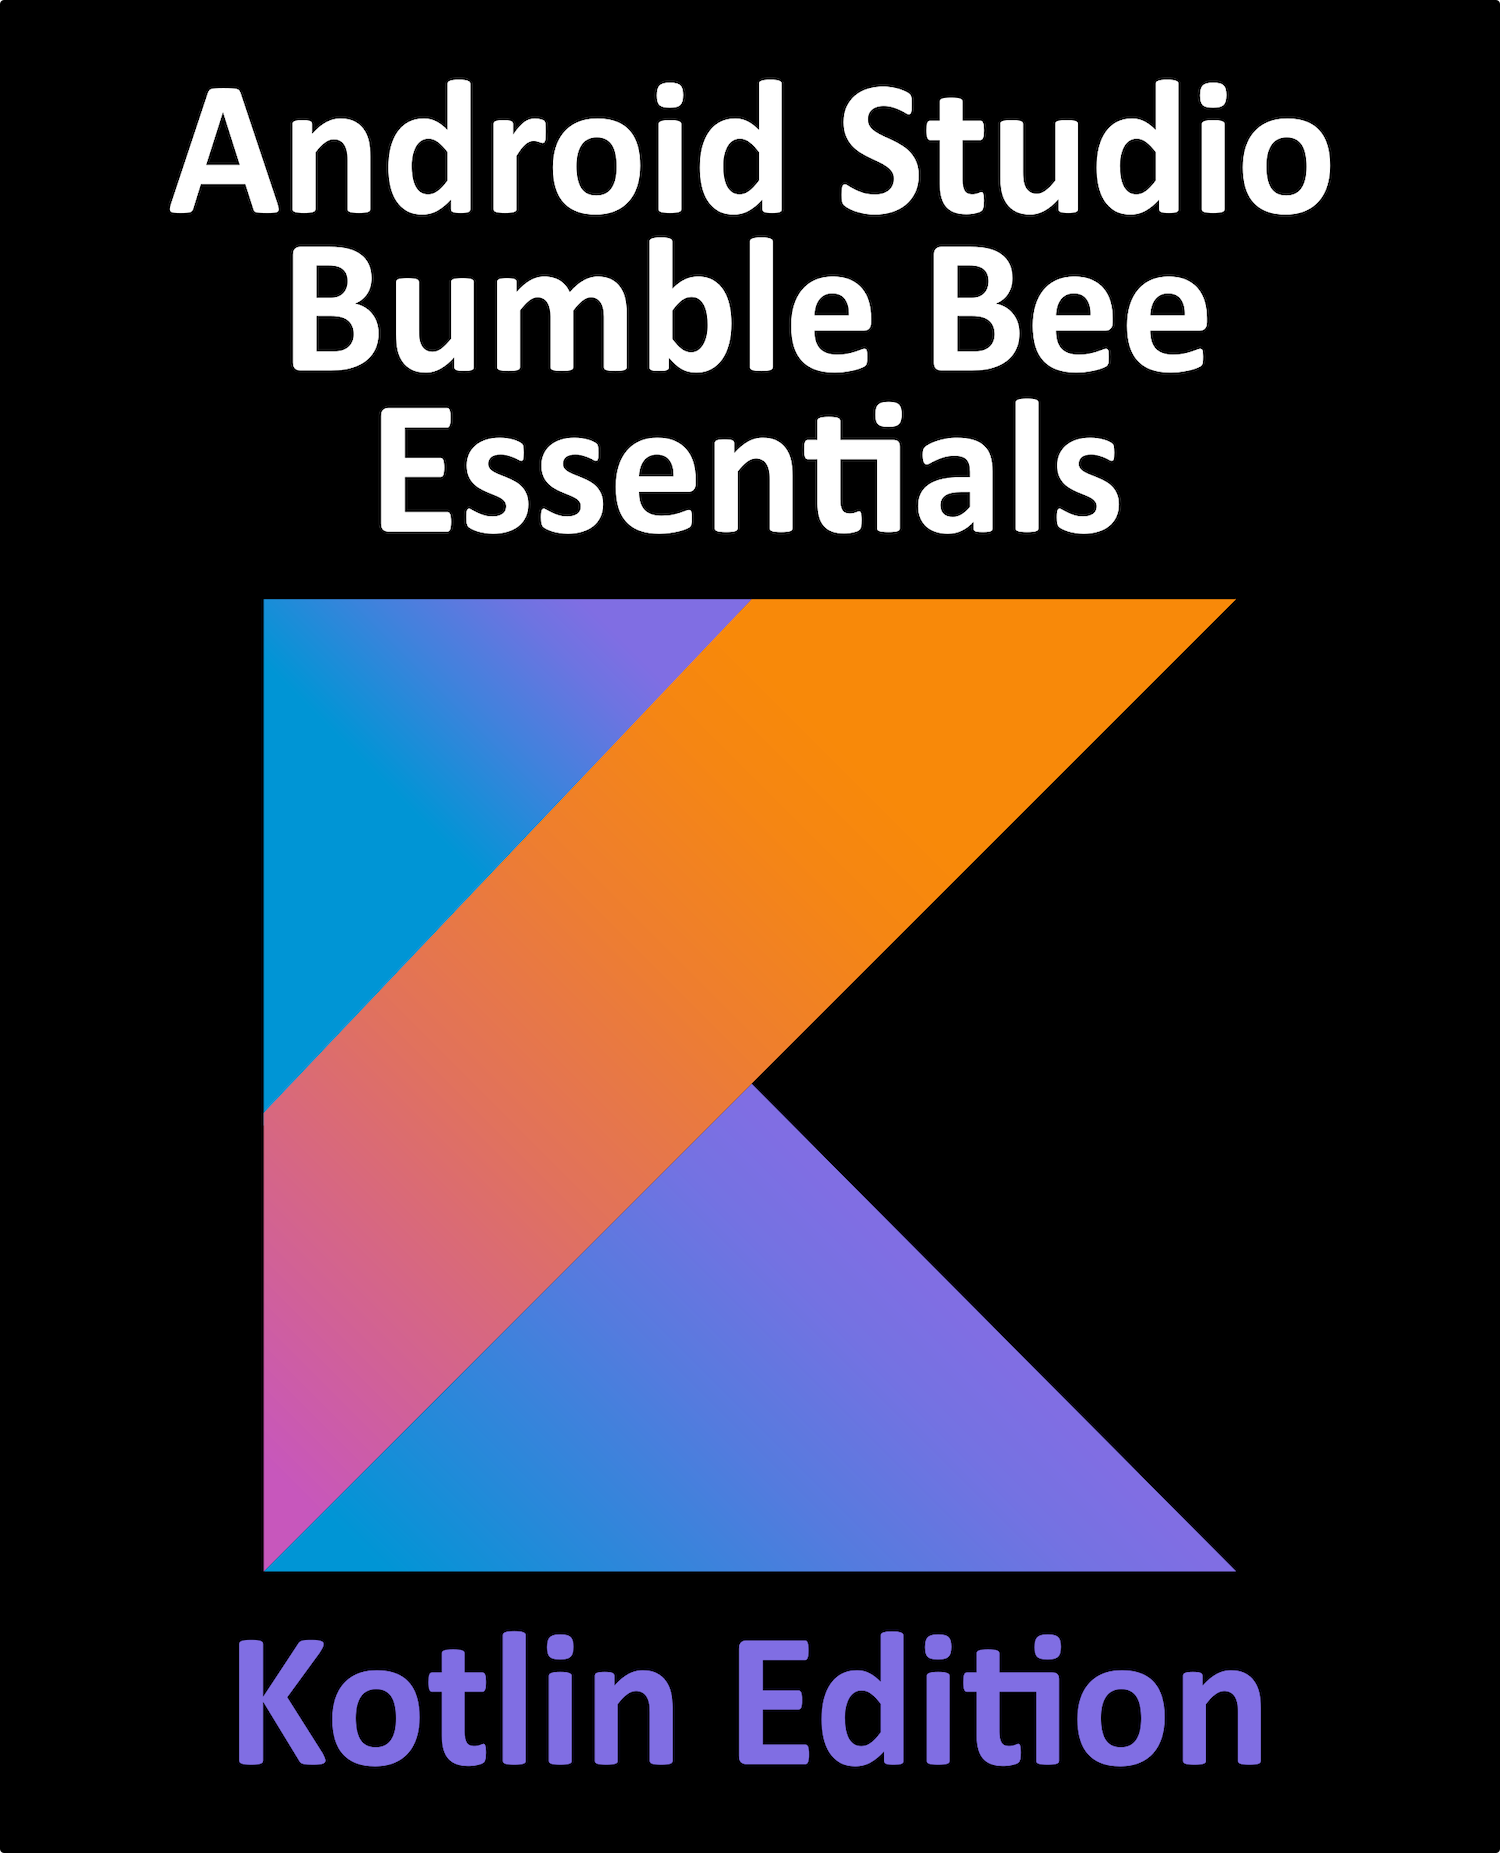 Android Studio Bumble Bee Essentials Kotlin Edition Android Studio Bumble Bee - photo 1